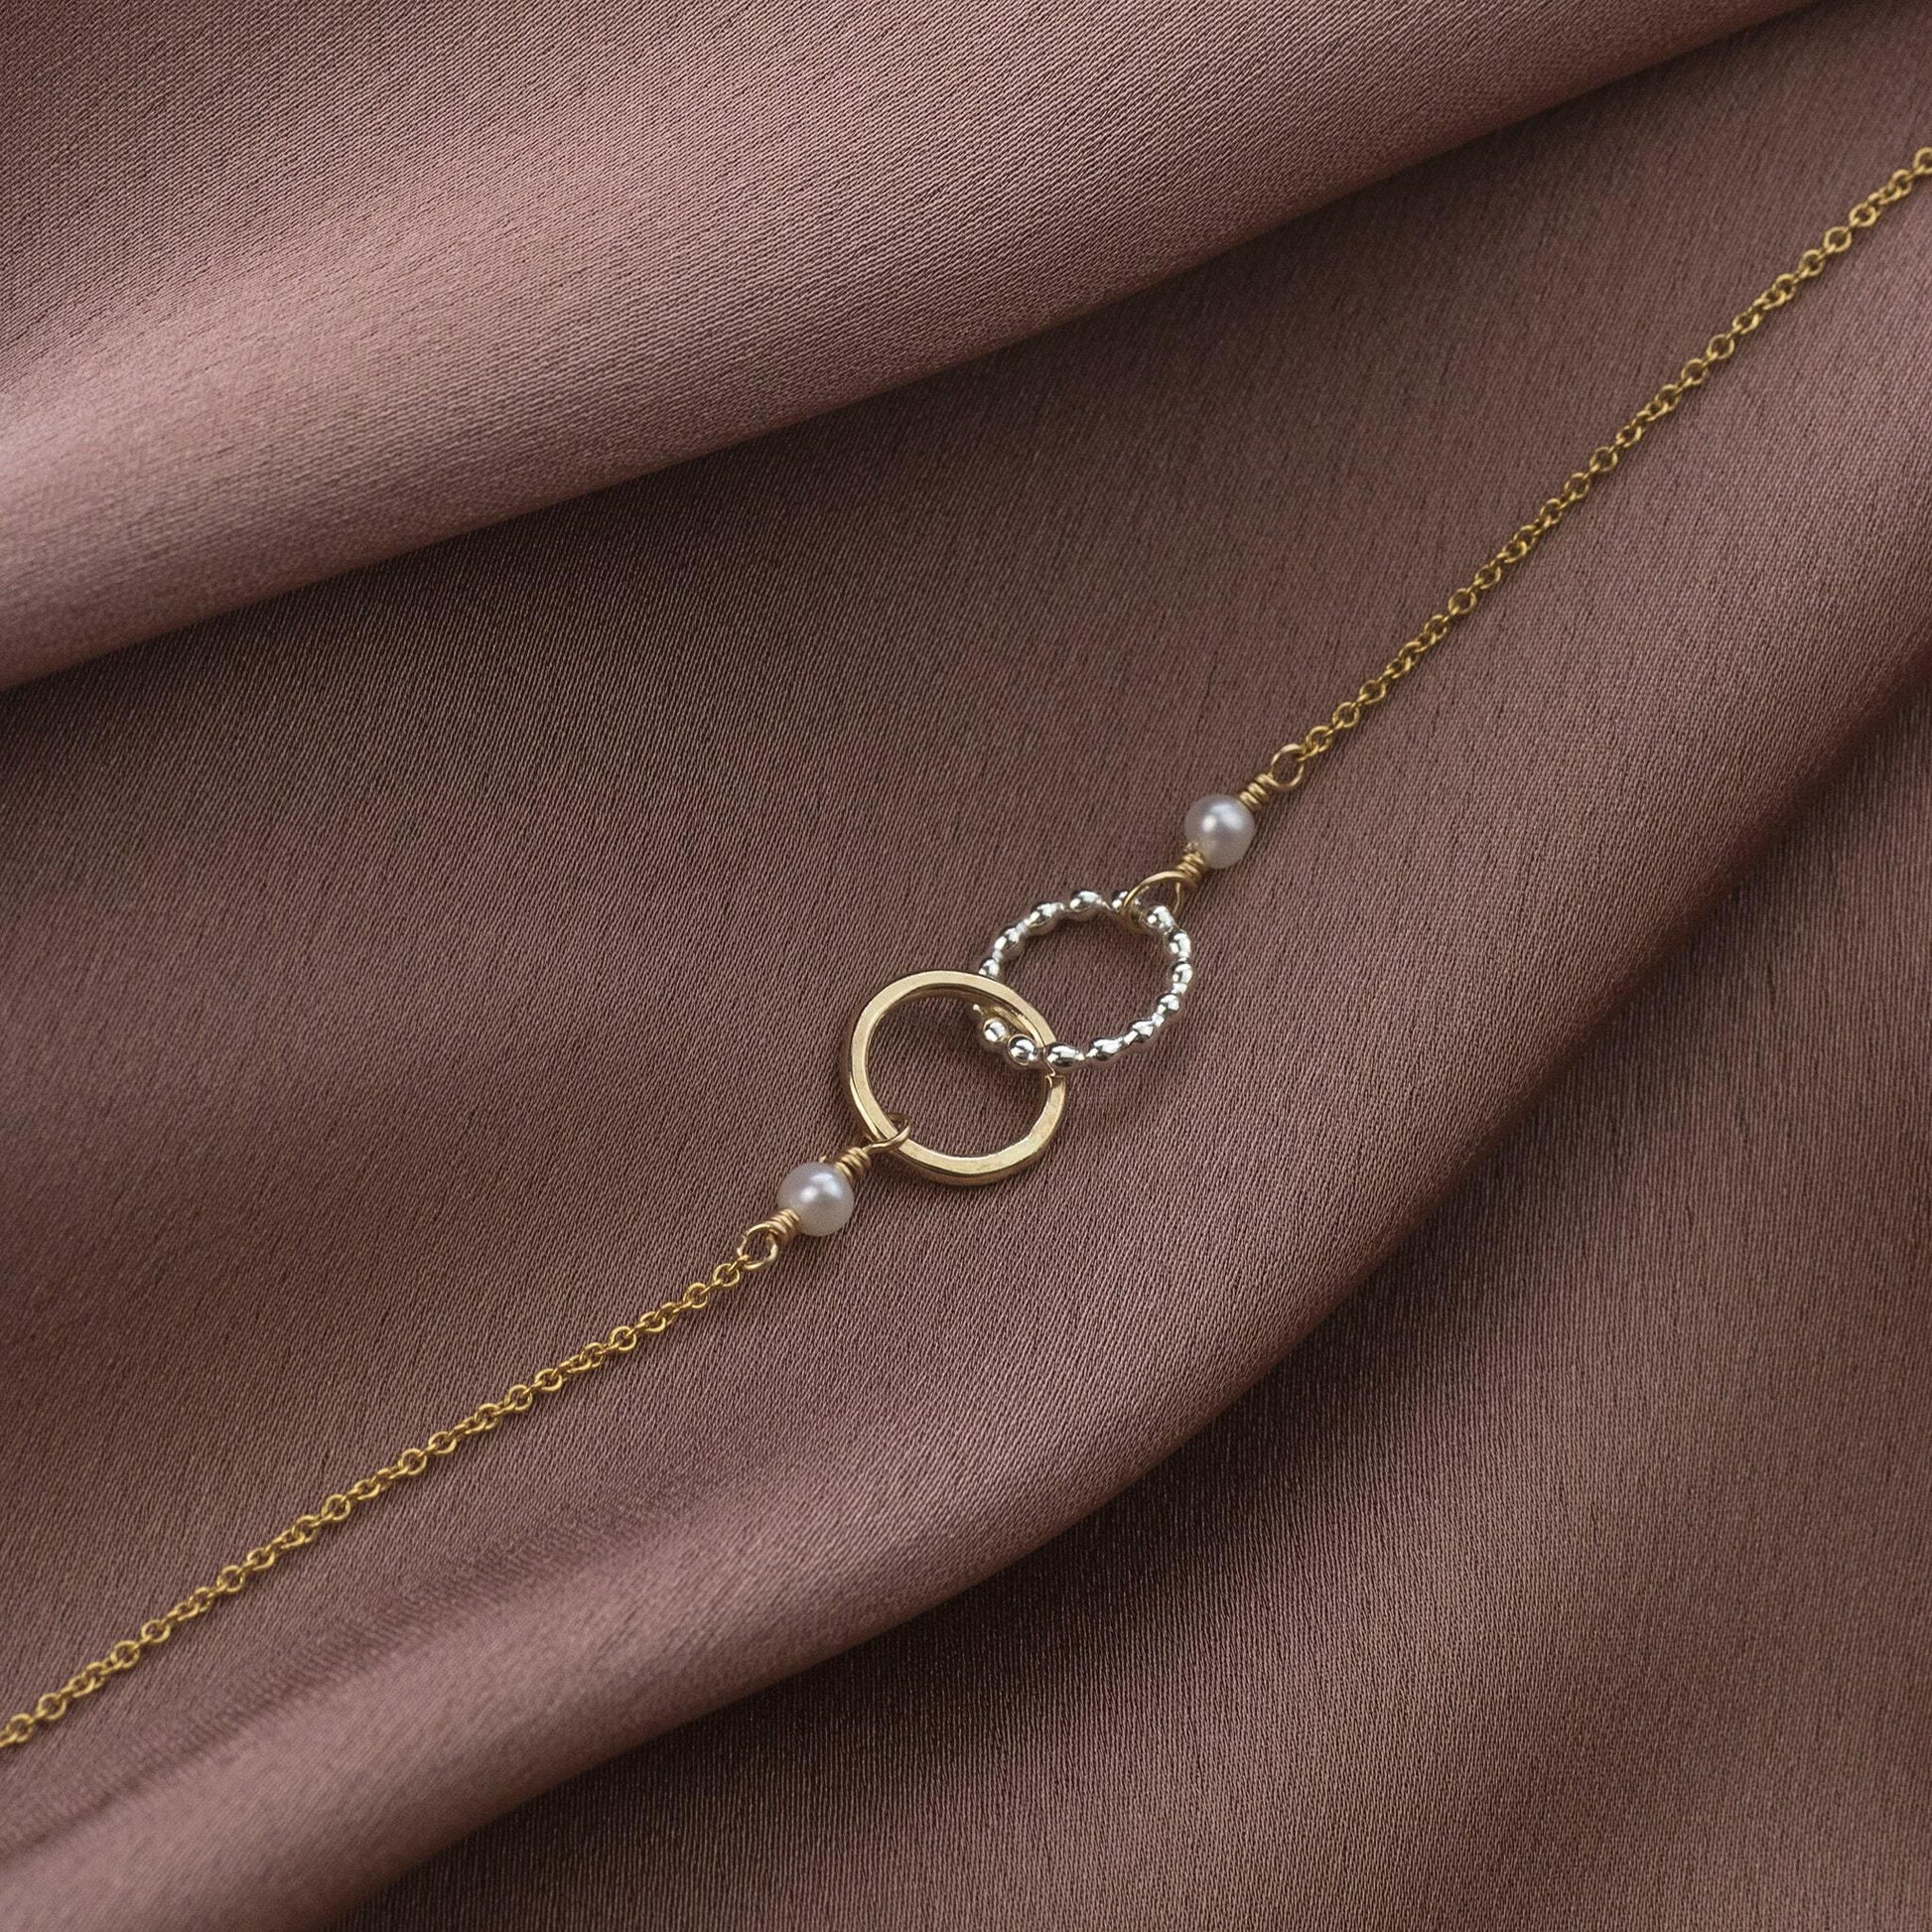 Gift for Bride from Sister - Love Link Bracelet - Silver & Gold